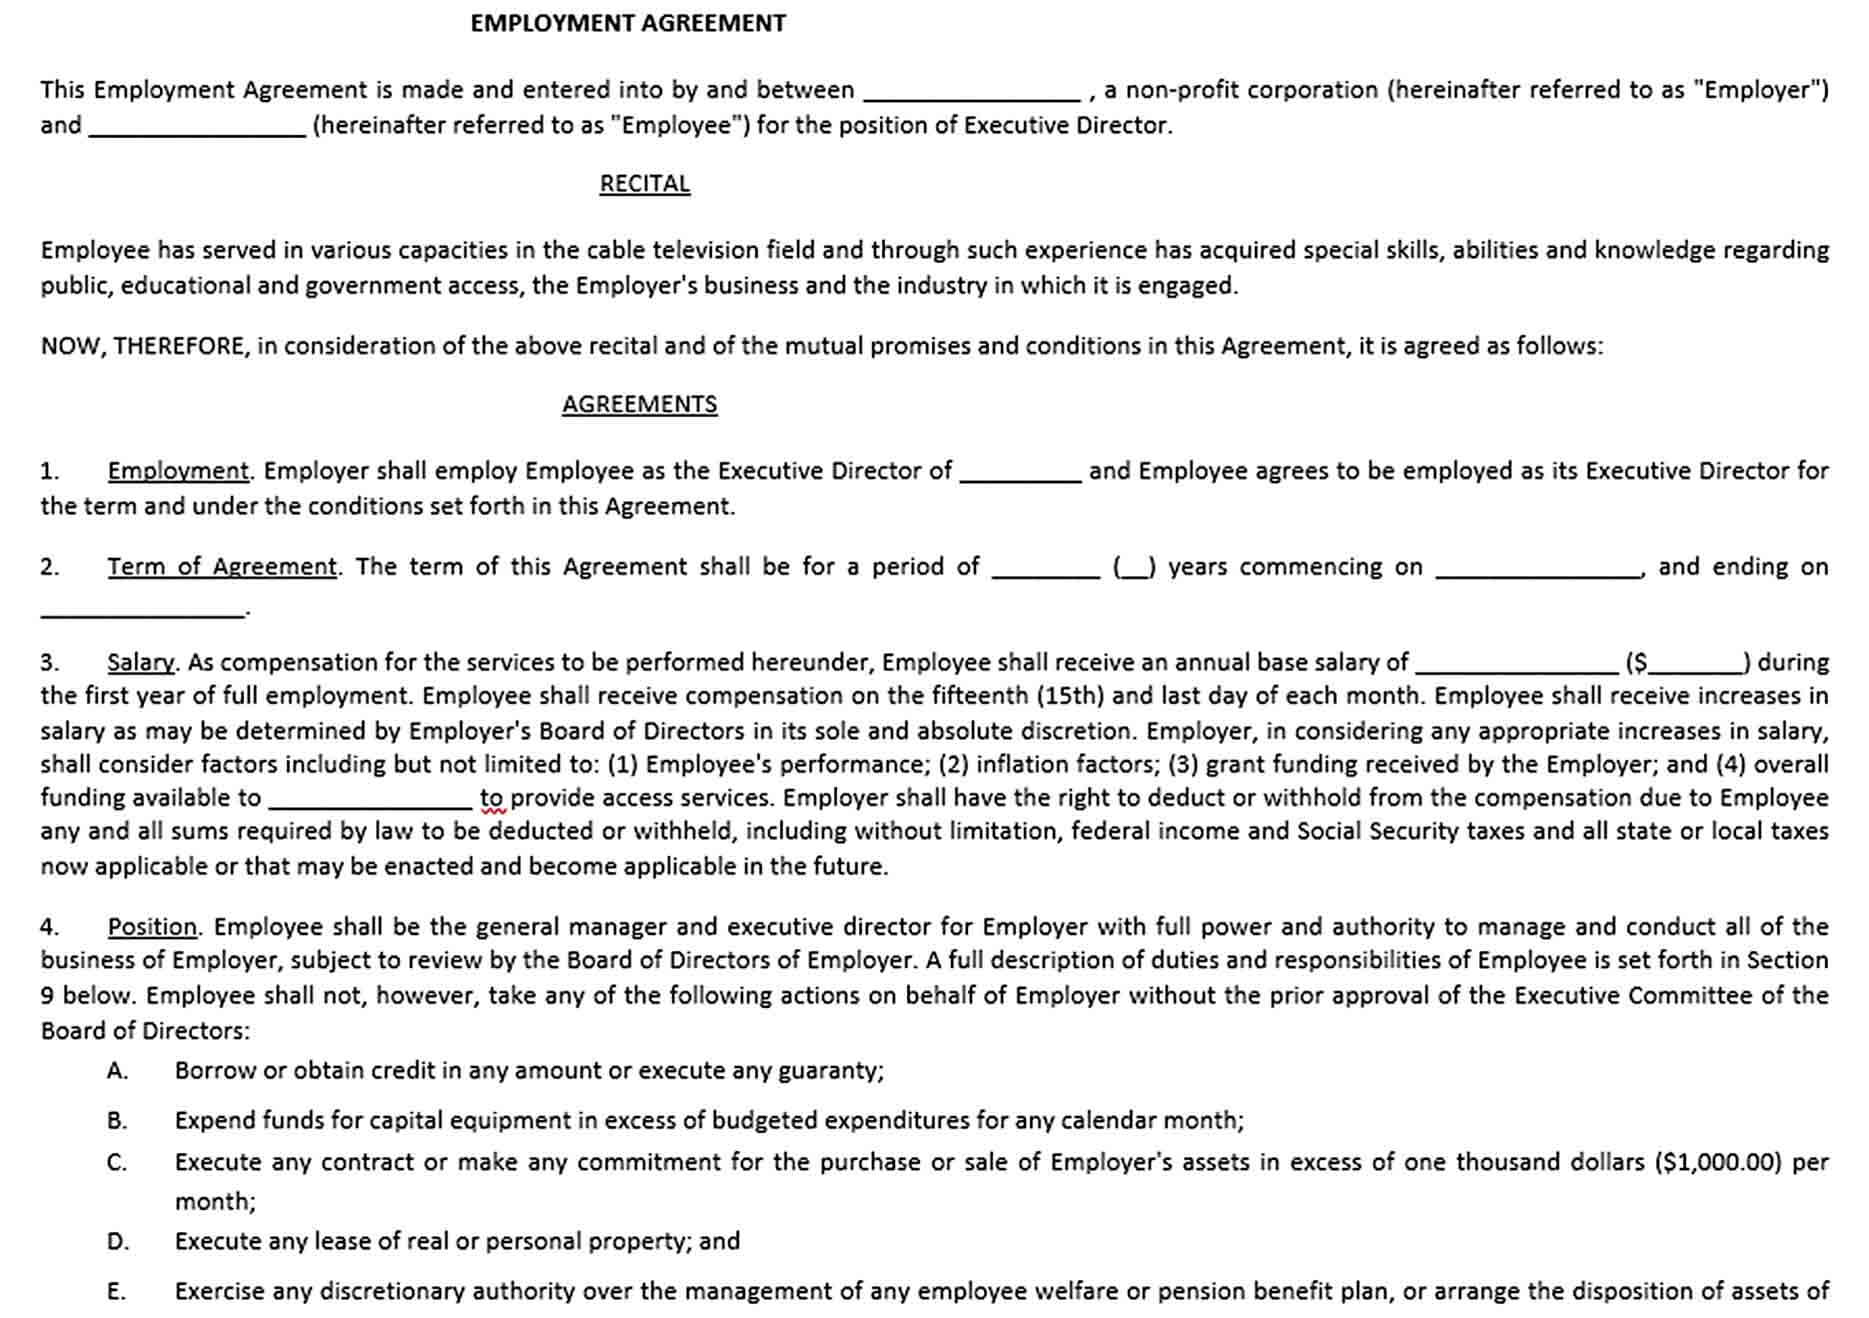 Sample Executive Director Employee Agreement Form